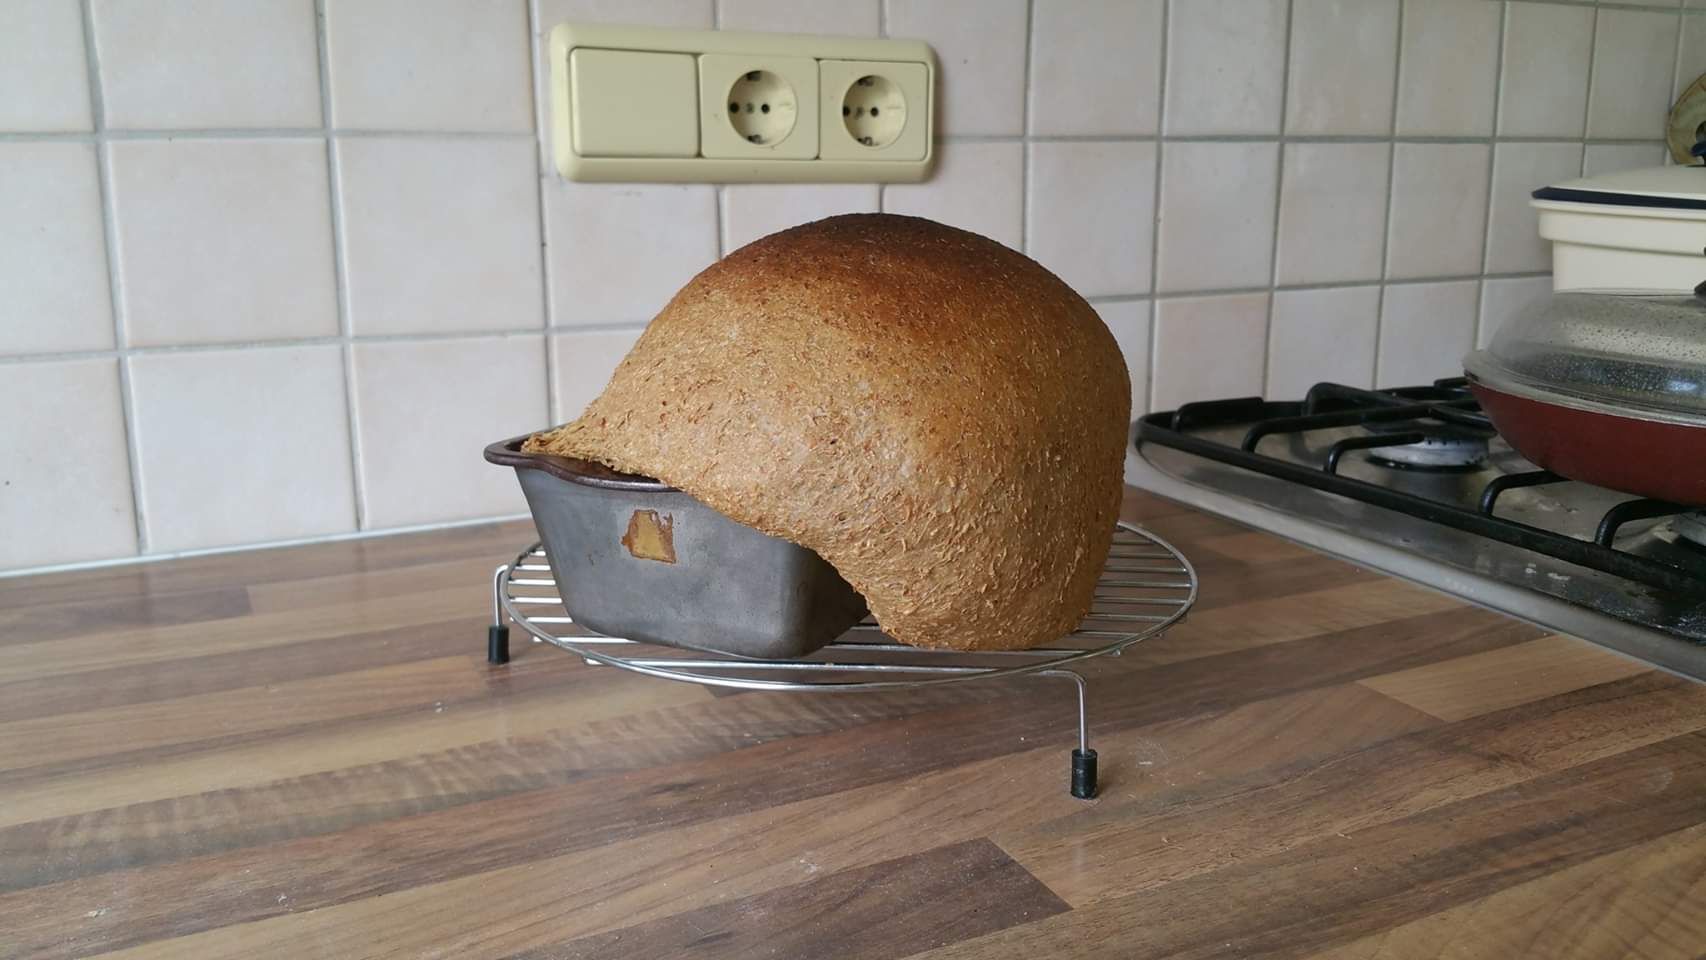 Today I decided to bake myself a nice big loaf of BREABWUALABLEUHAEUA